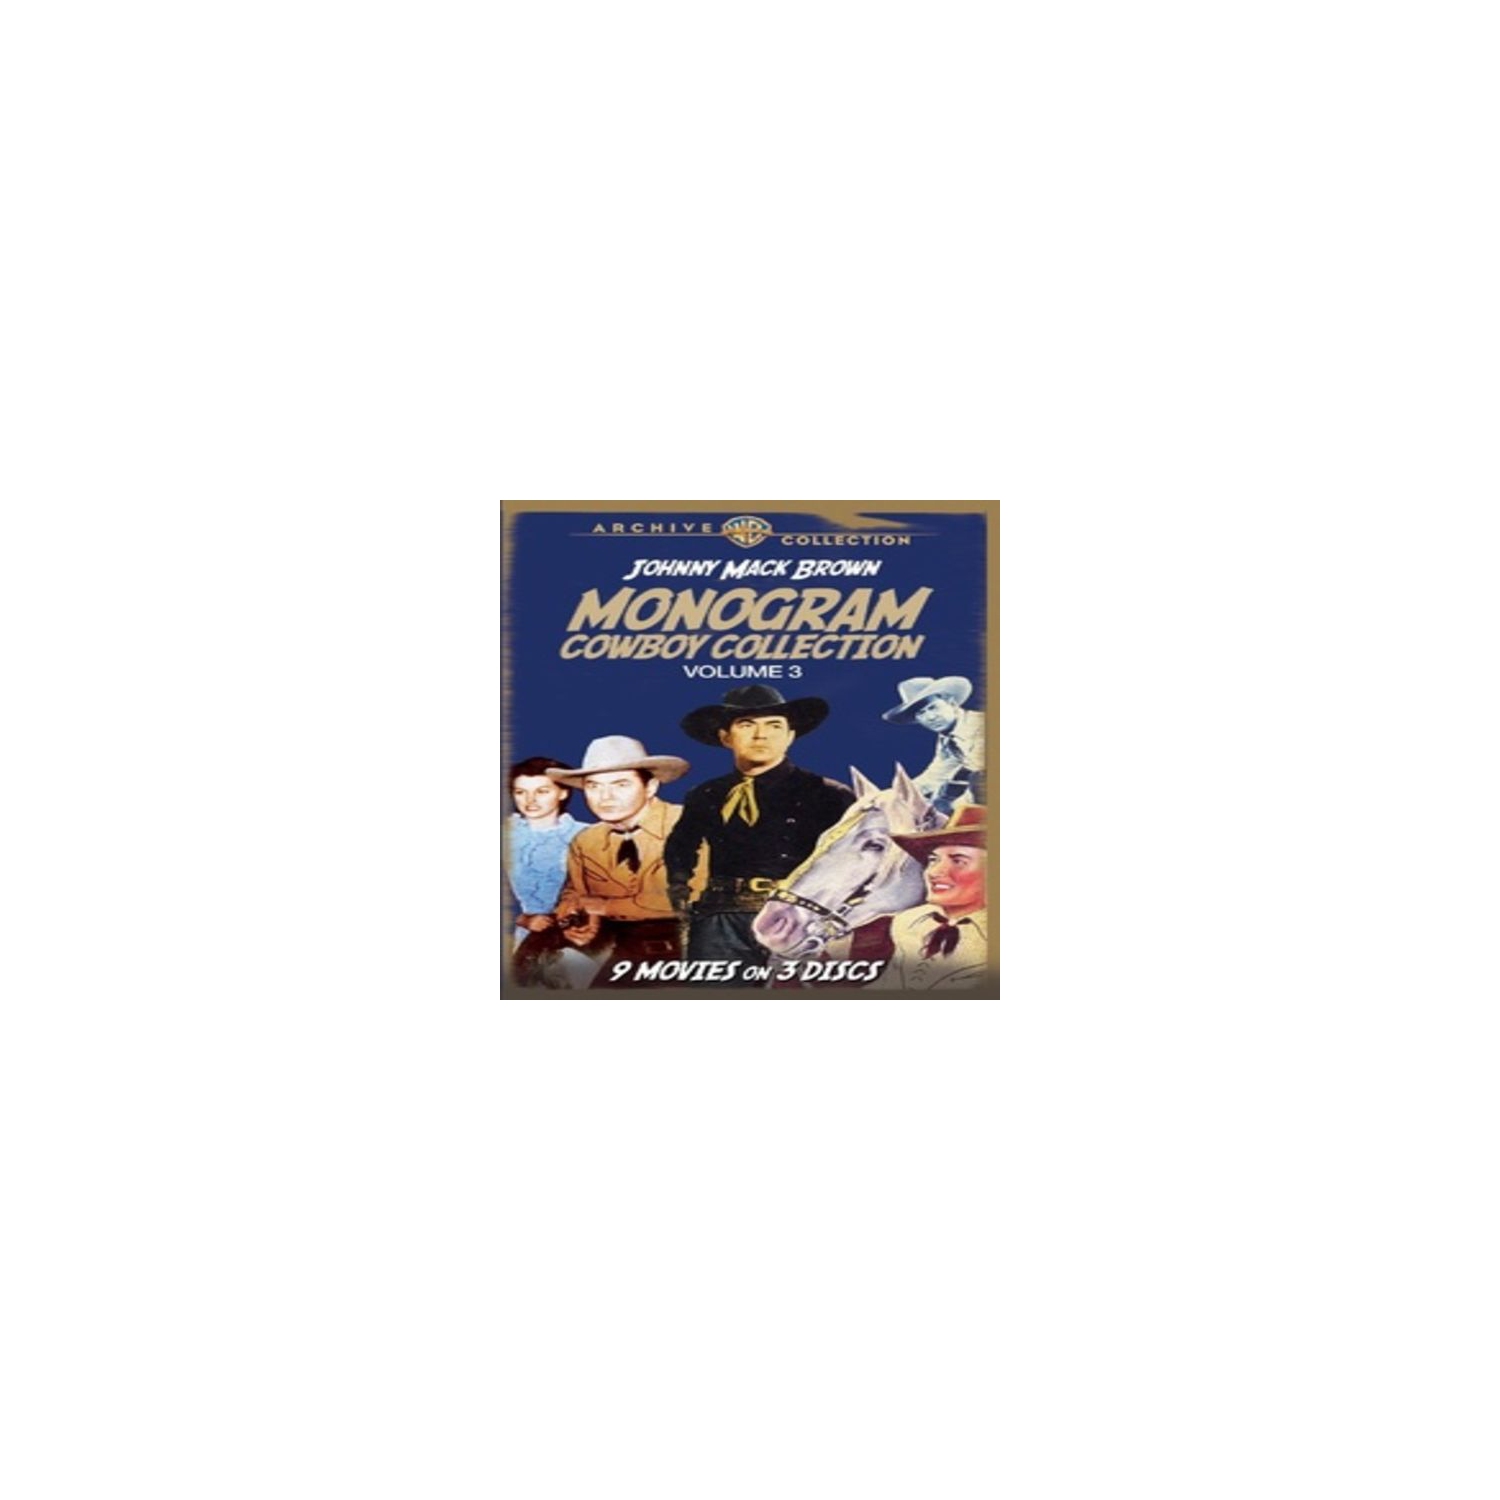 Allied Vaughn 883316516669 Monogram Cowboy Collection Volume 3: Johnny Mack Brown Classics3 - 3 Disc Set